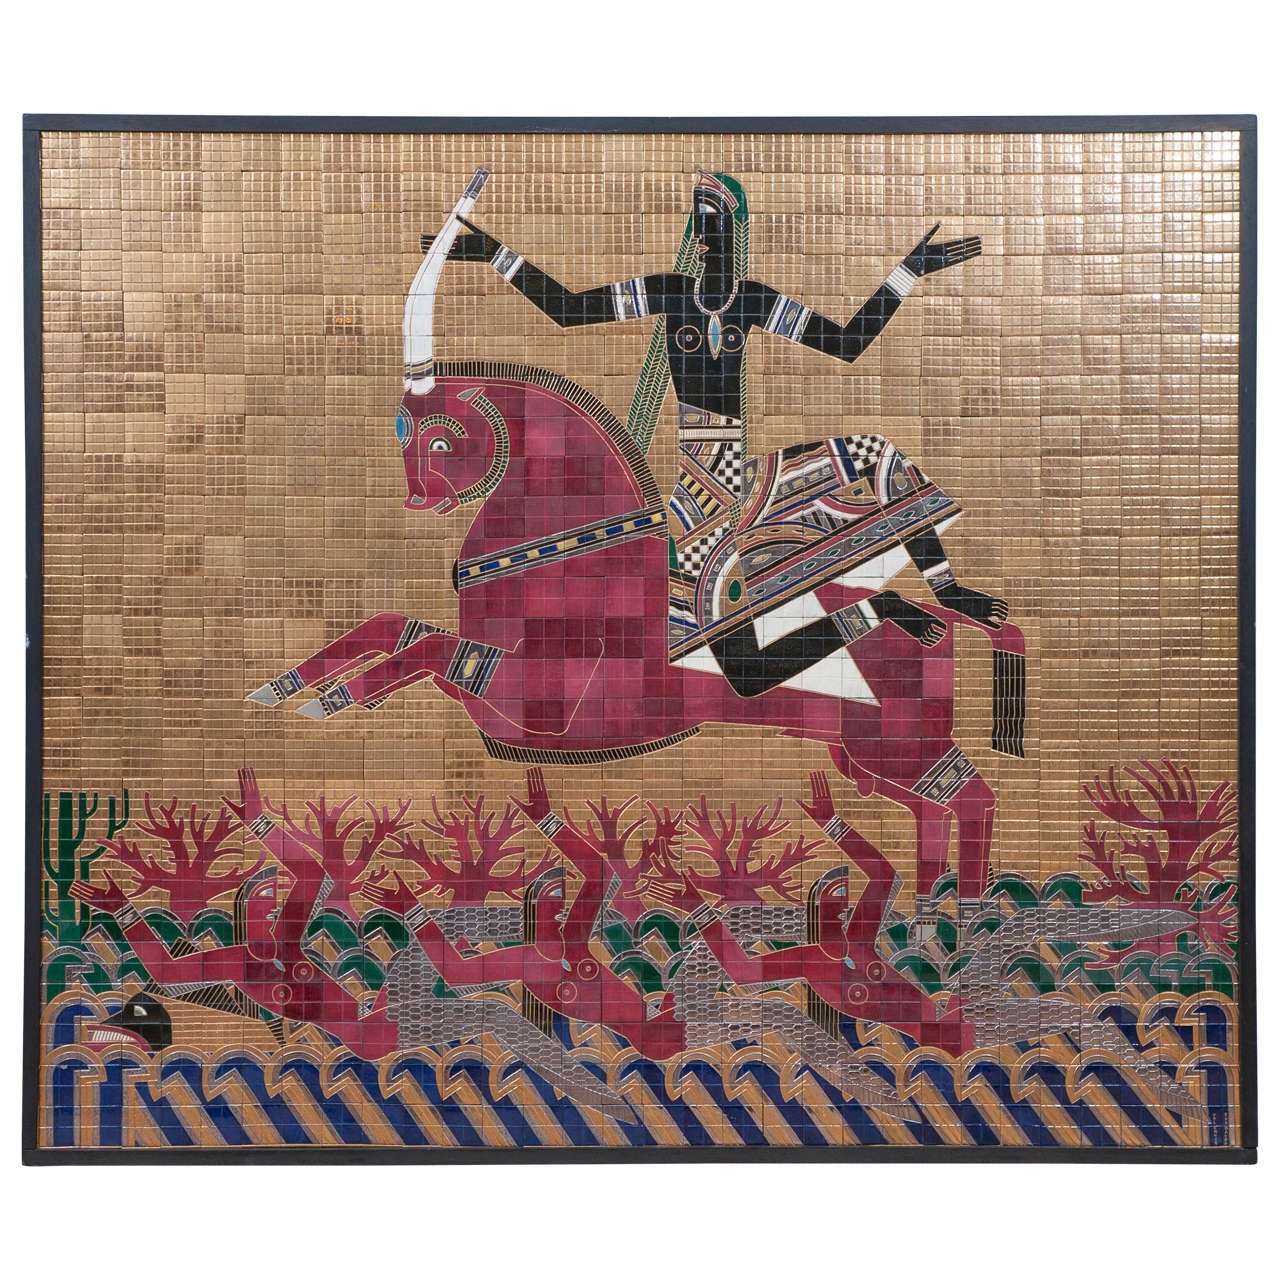 Egyptian Motif Mosaic by Valentin-Firsov Shabaeff